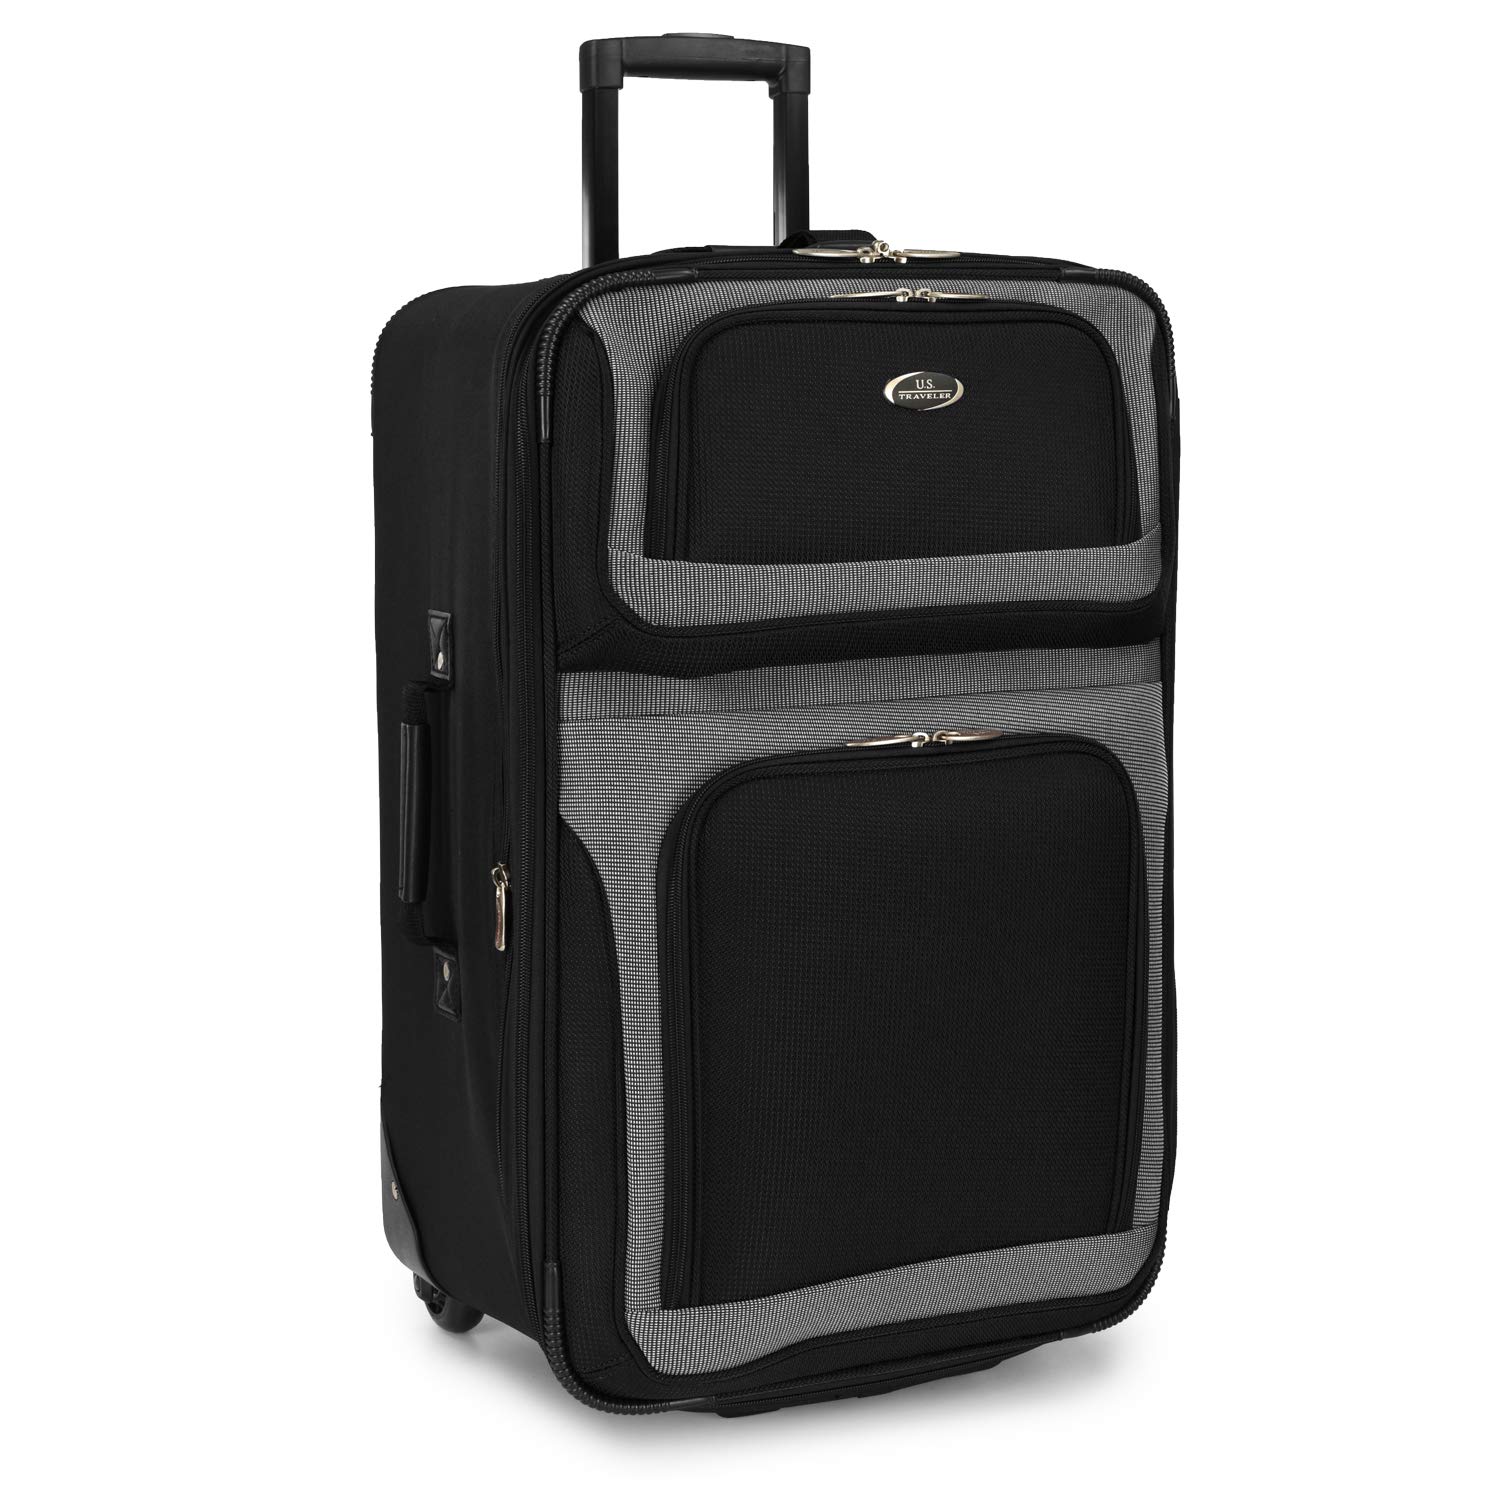 U.S. Traveler New Yorker Lightweight Softside Expandable Travel Rolling Luggage, Black/Grey, 4-Piece Set (15/21/25/29)